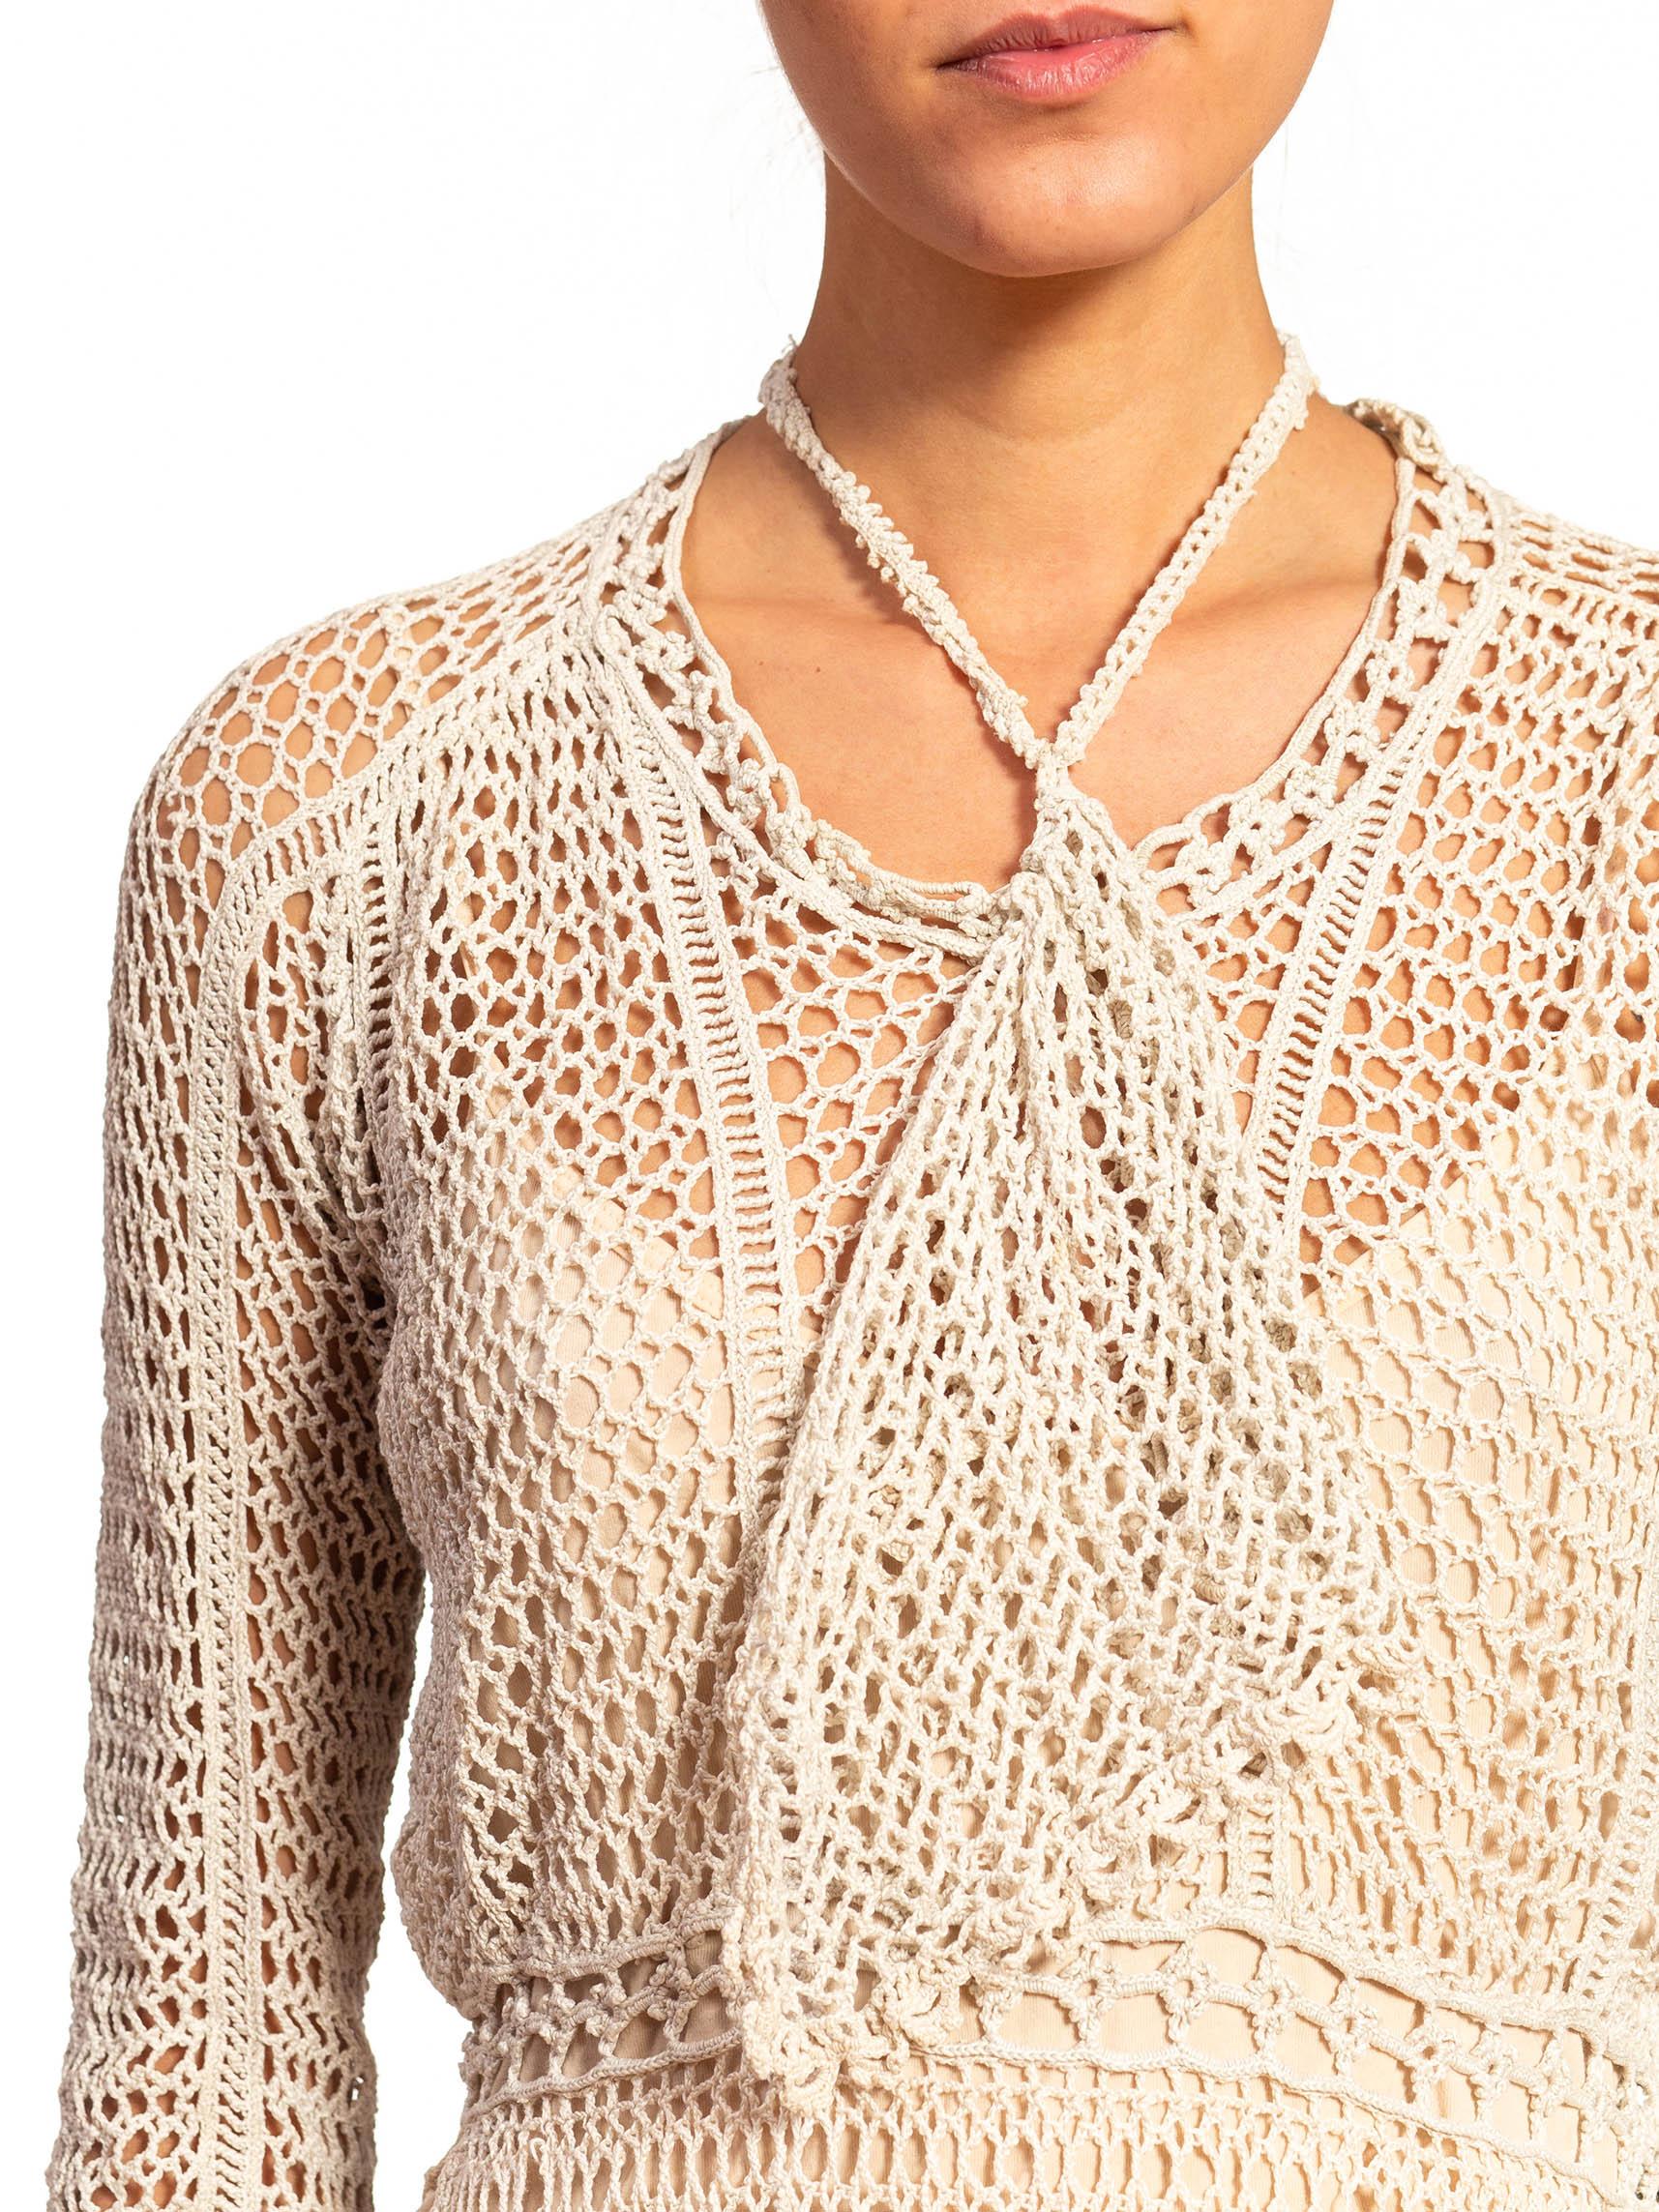 Victorian White Cotton Crochet Lace Top For Sale 5